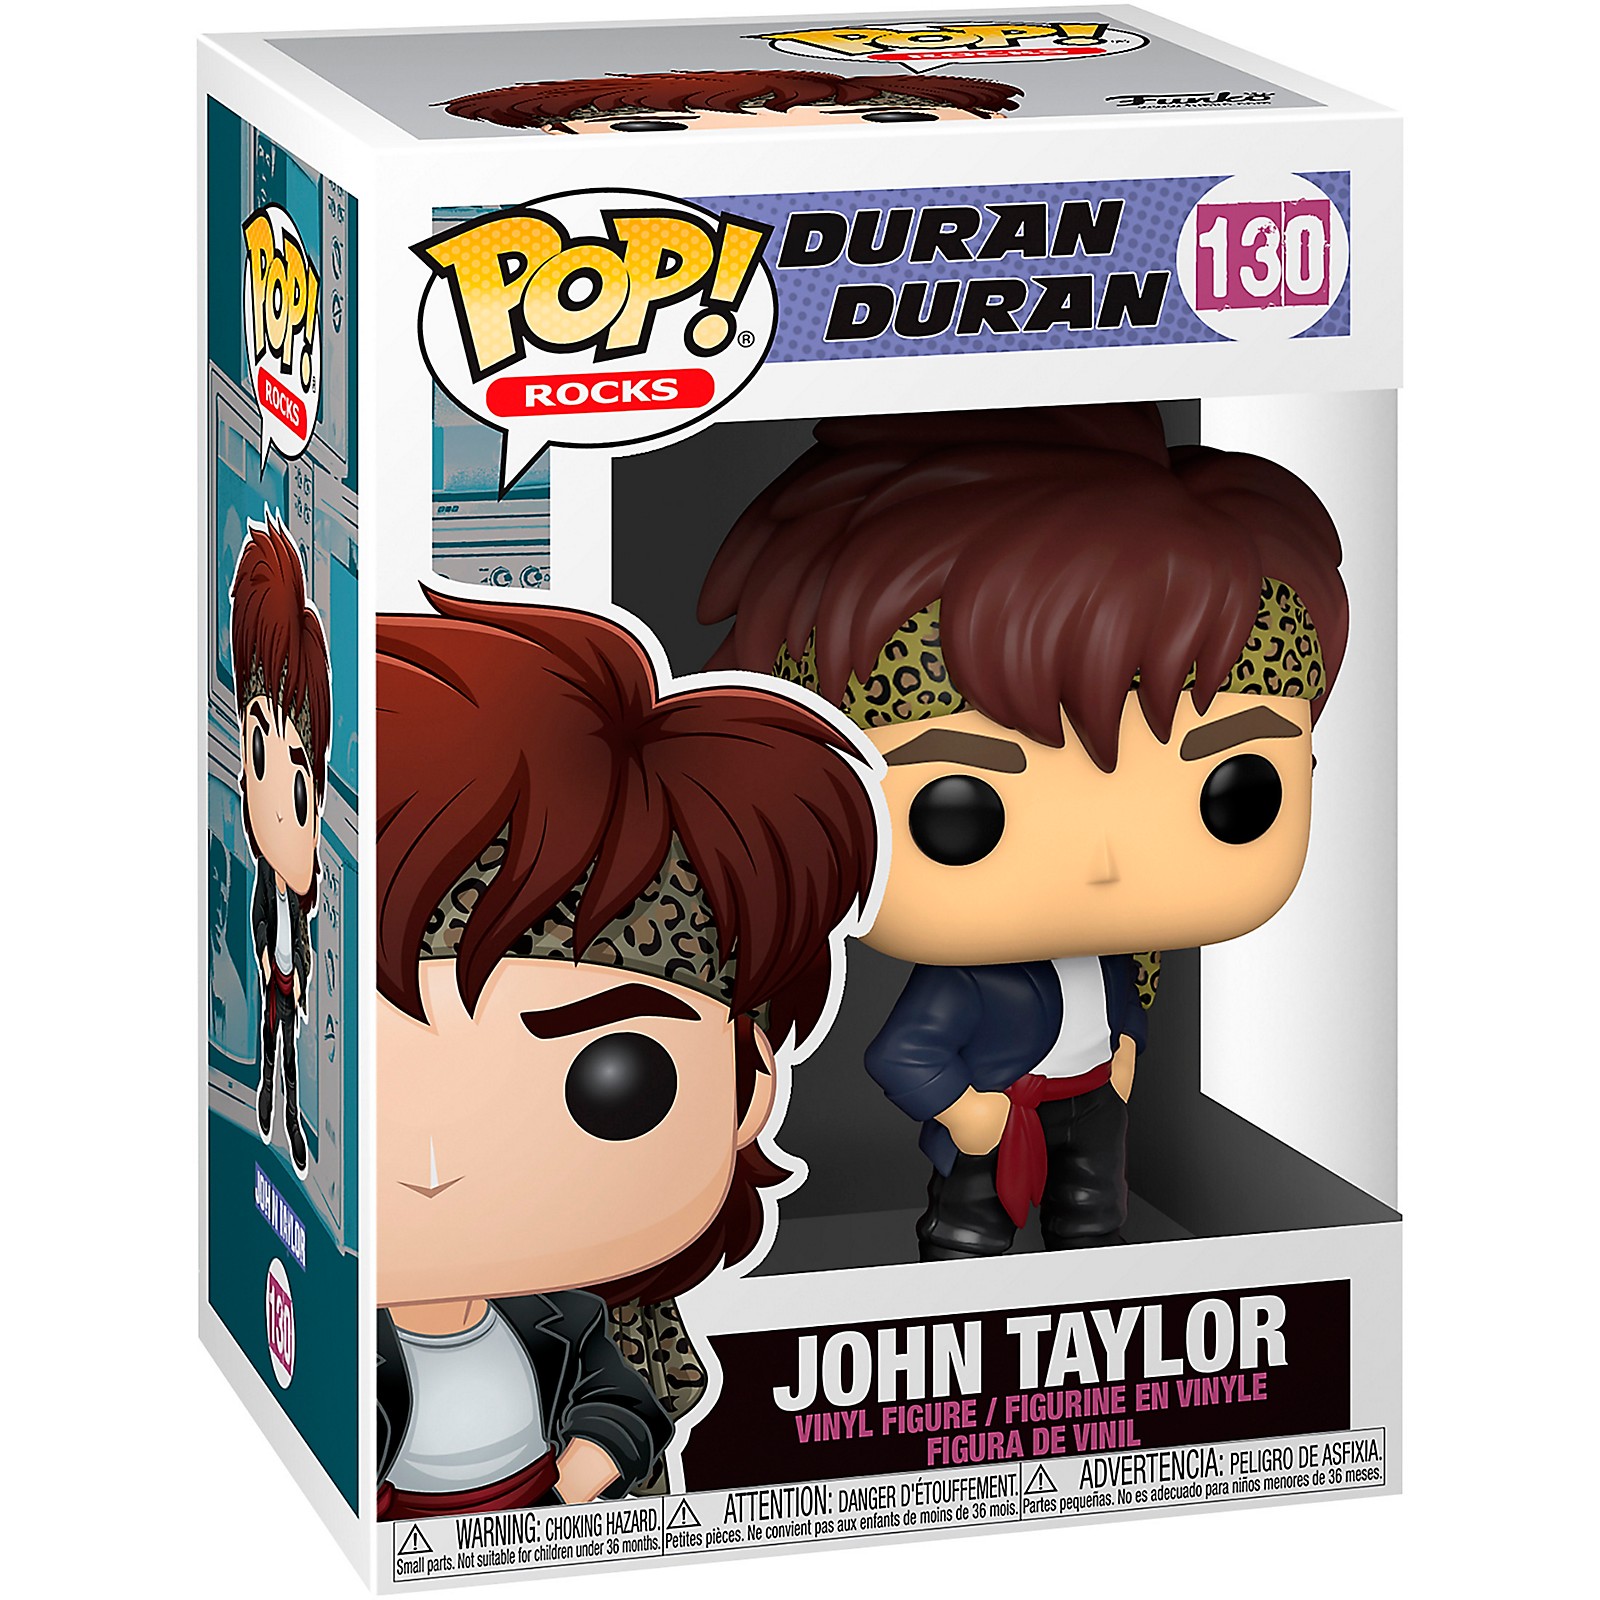 Funko Duran Duran POP! Rocks John Taylor Vinyl Figure 130 Musician's